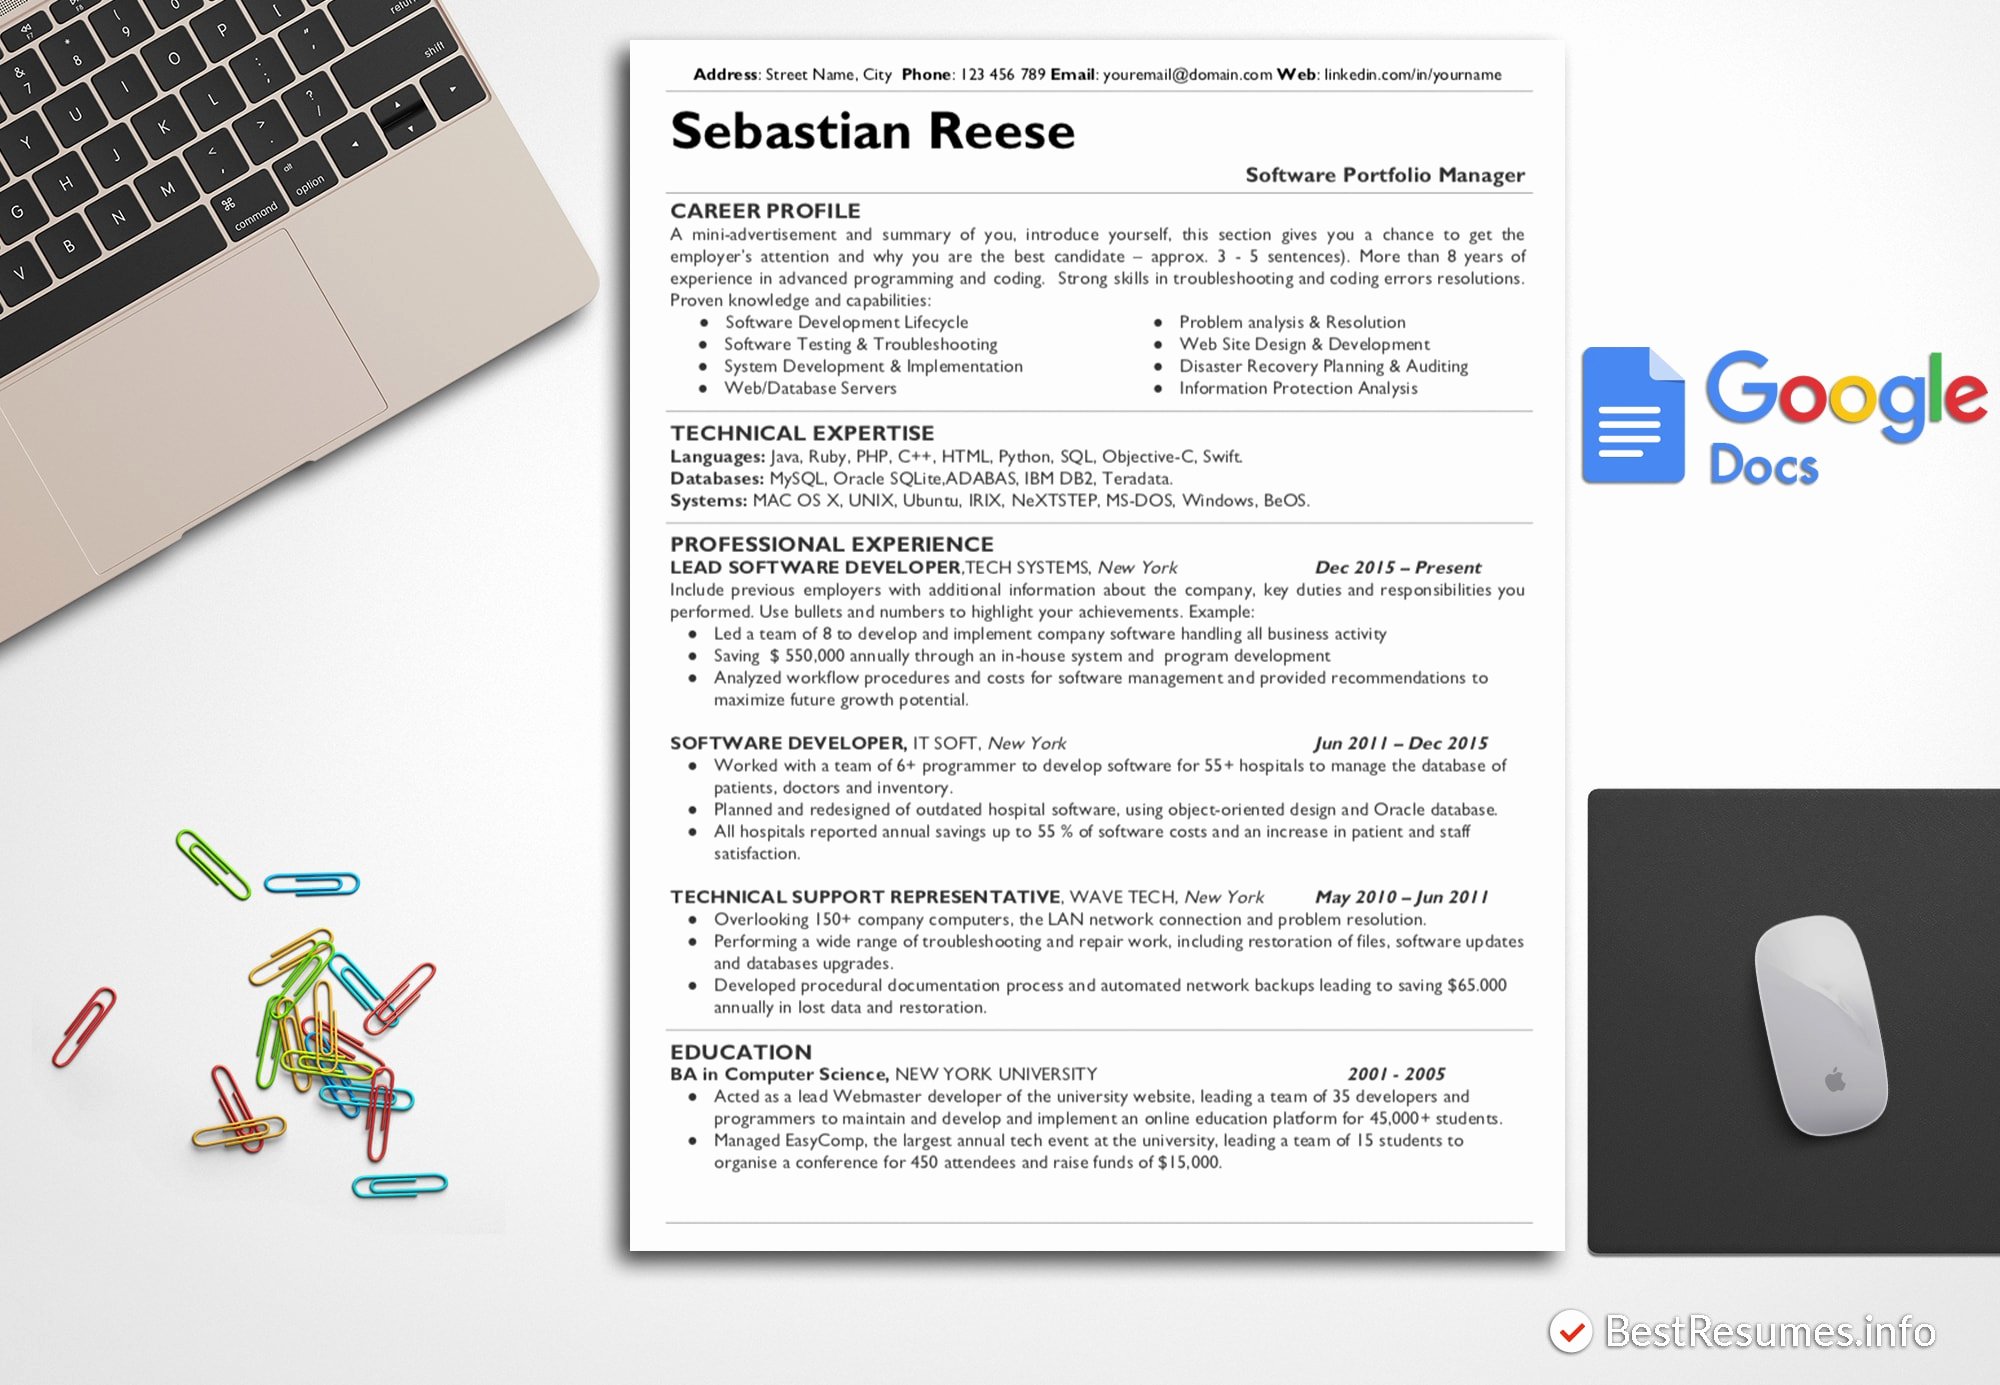 Google Docs Check Register Luxury Resume Template Sebastian Reese Bestresumes